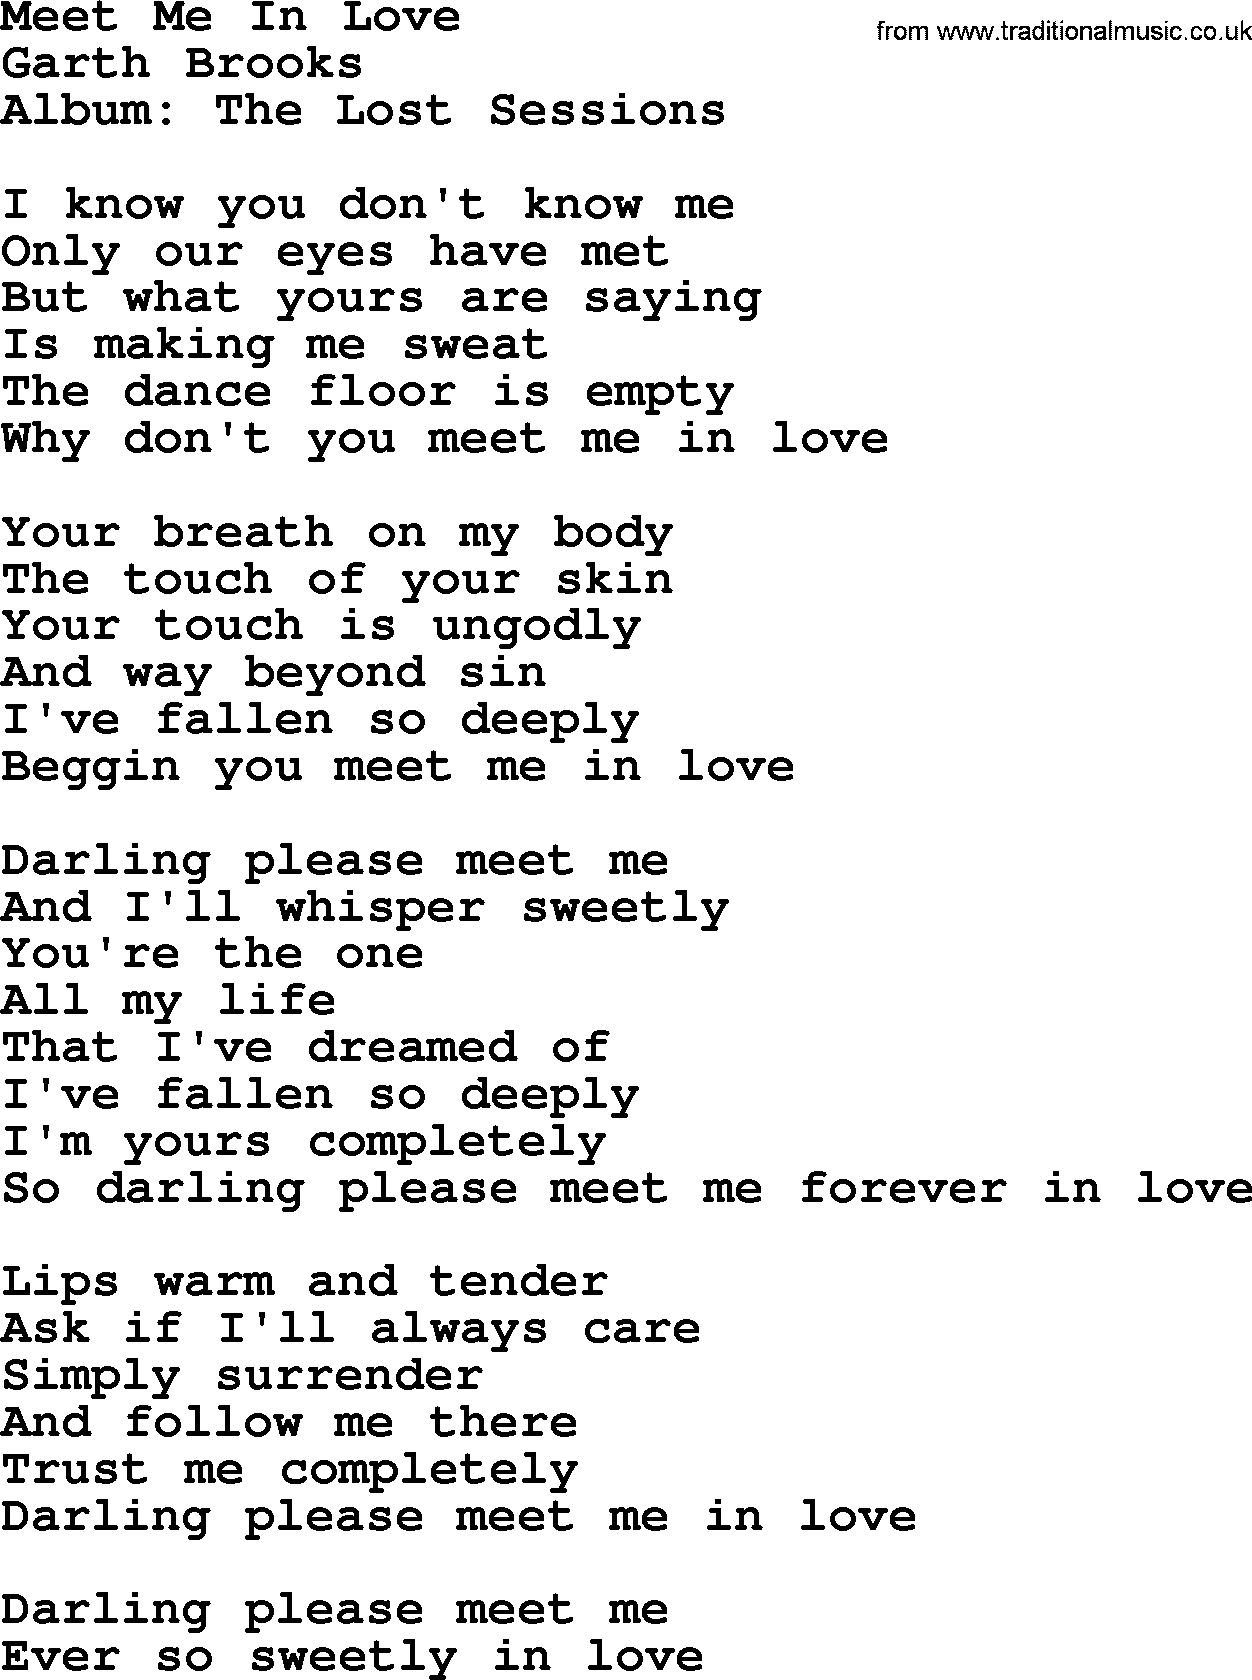 Garth Brooks song: Meet Me In Love, lyrics